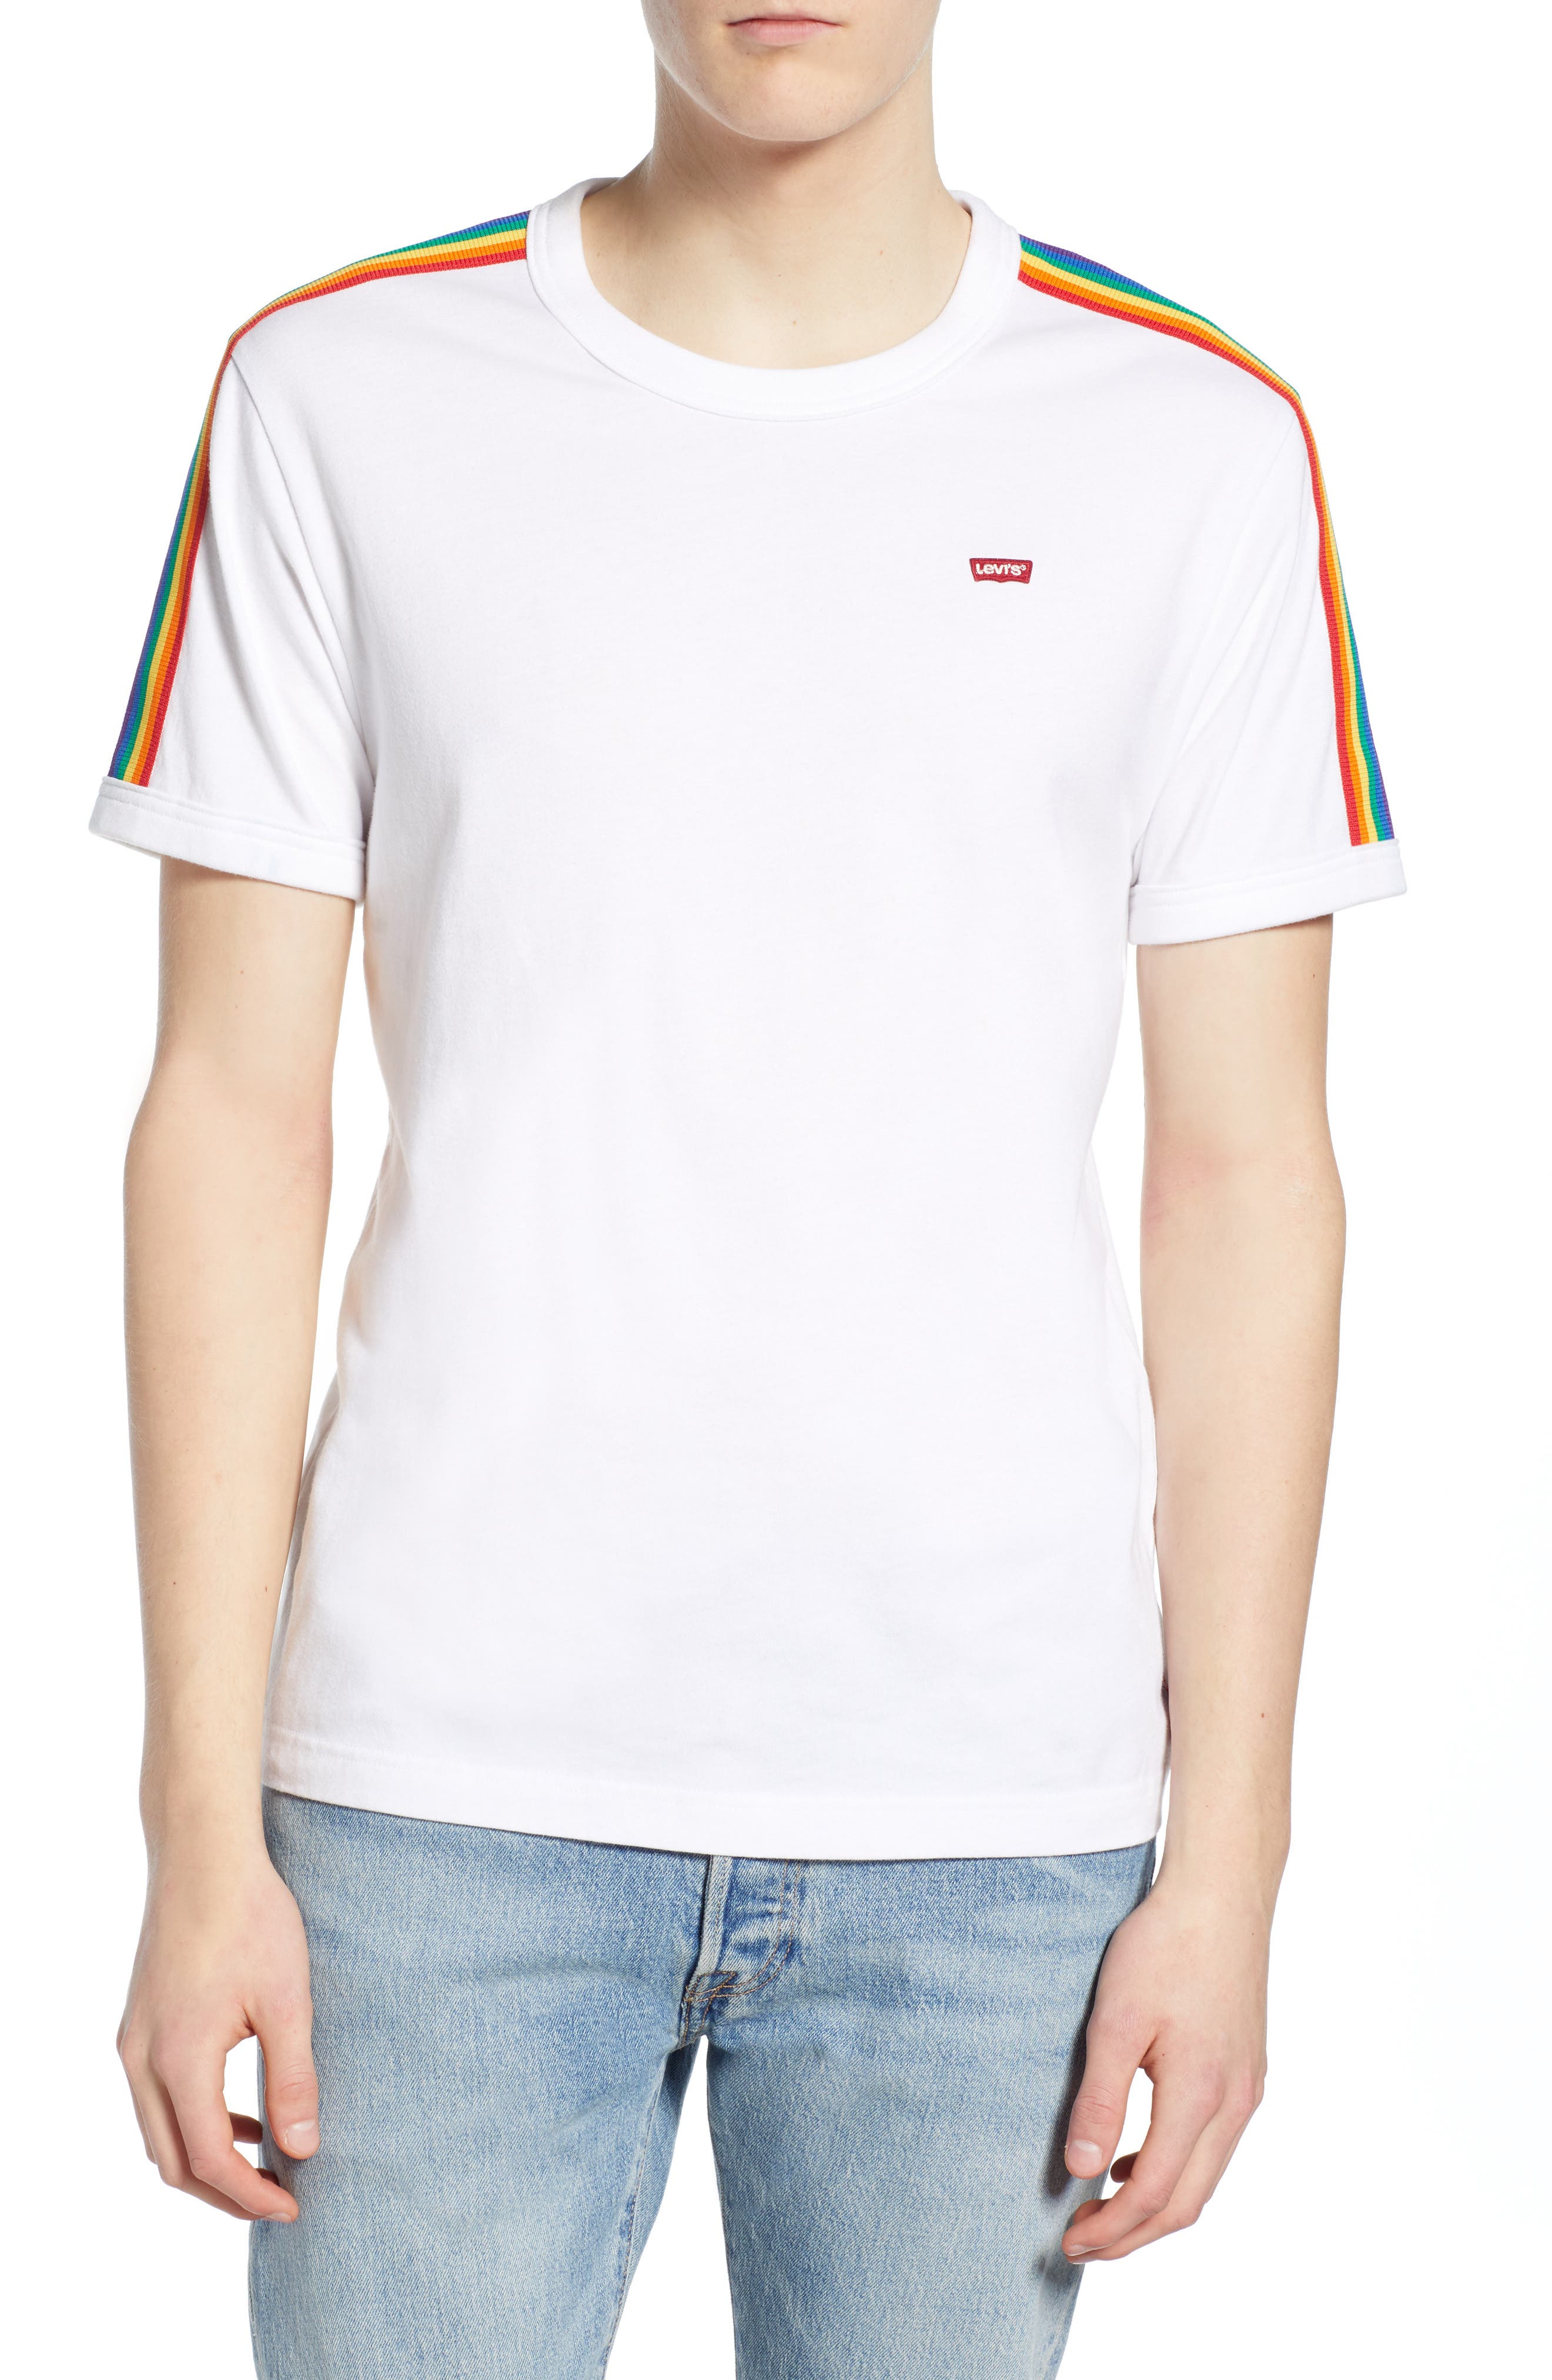 levi's pride shirt